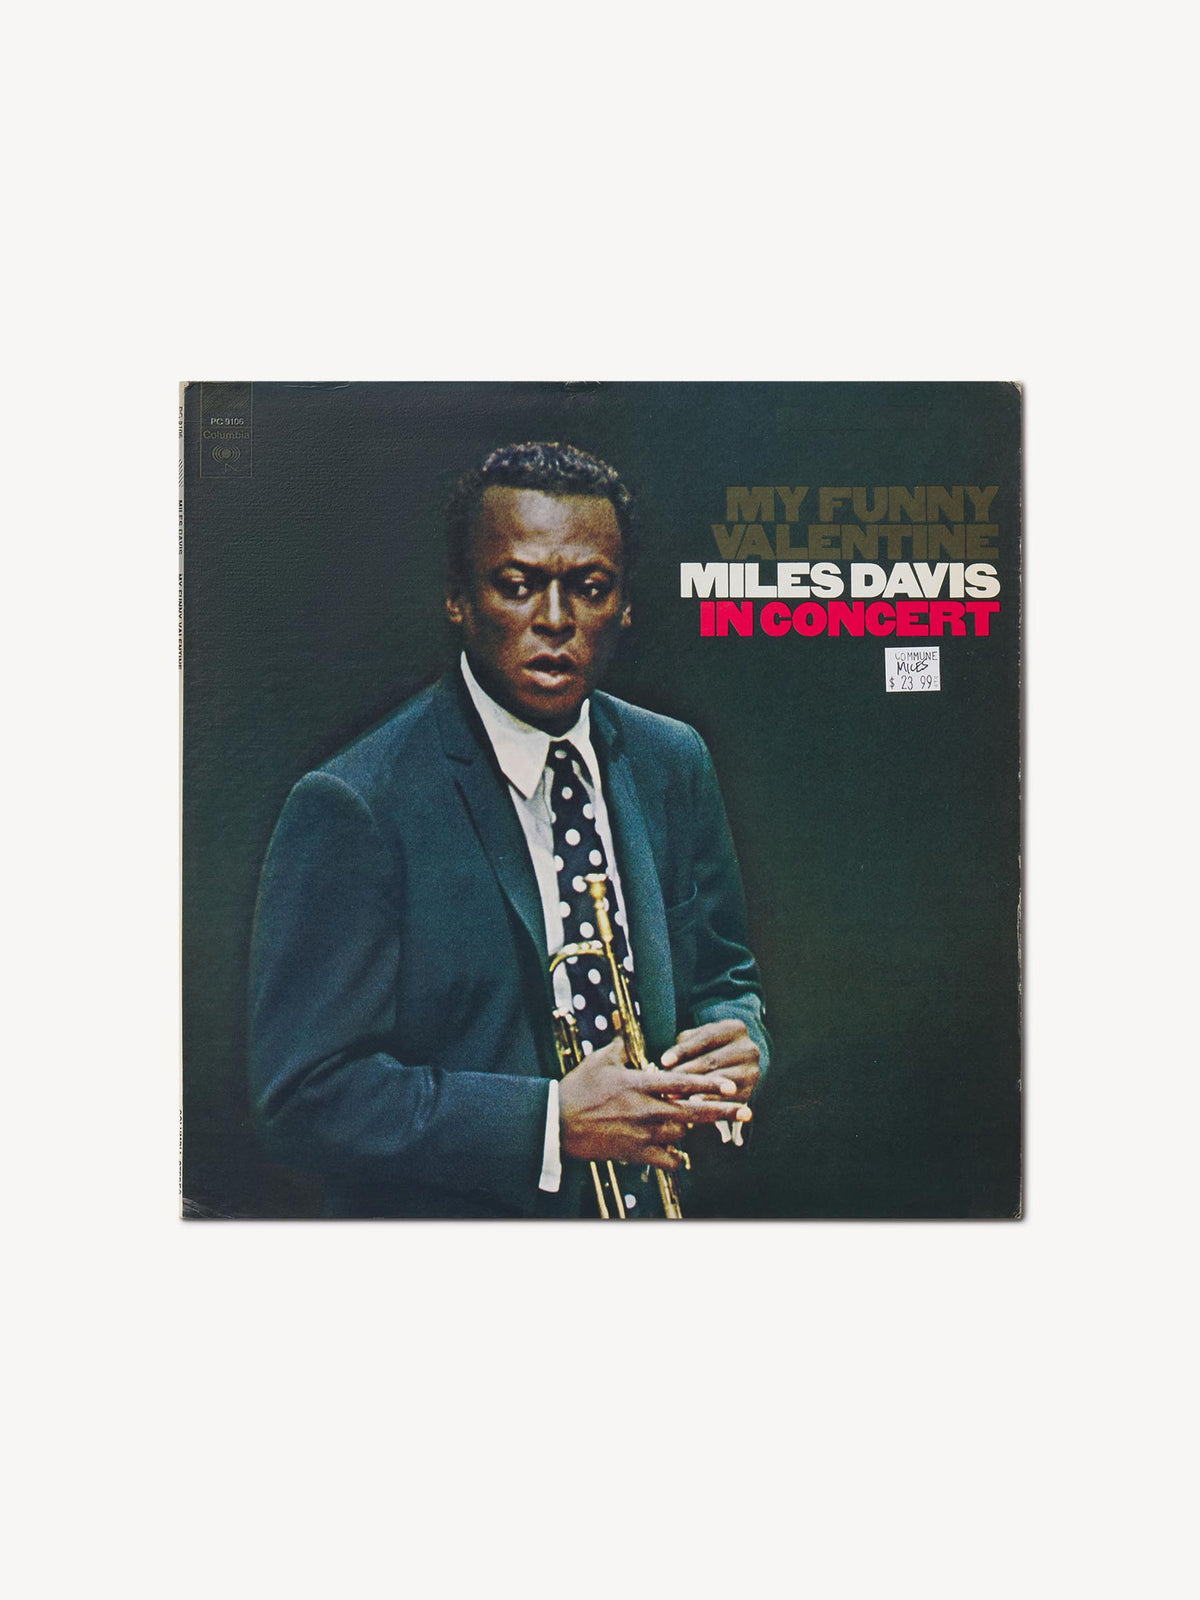 Miles Davis, My Funny Valentine in Concert, Vinyl - 0255 - Product Flat